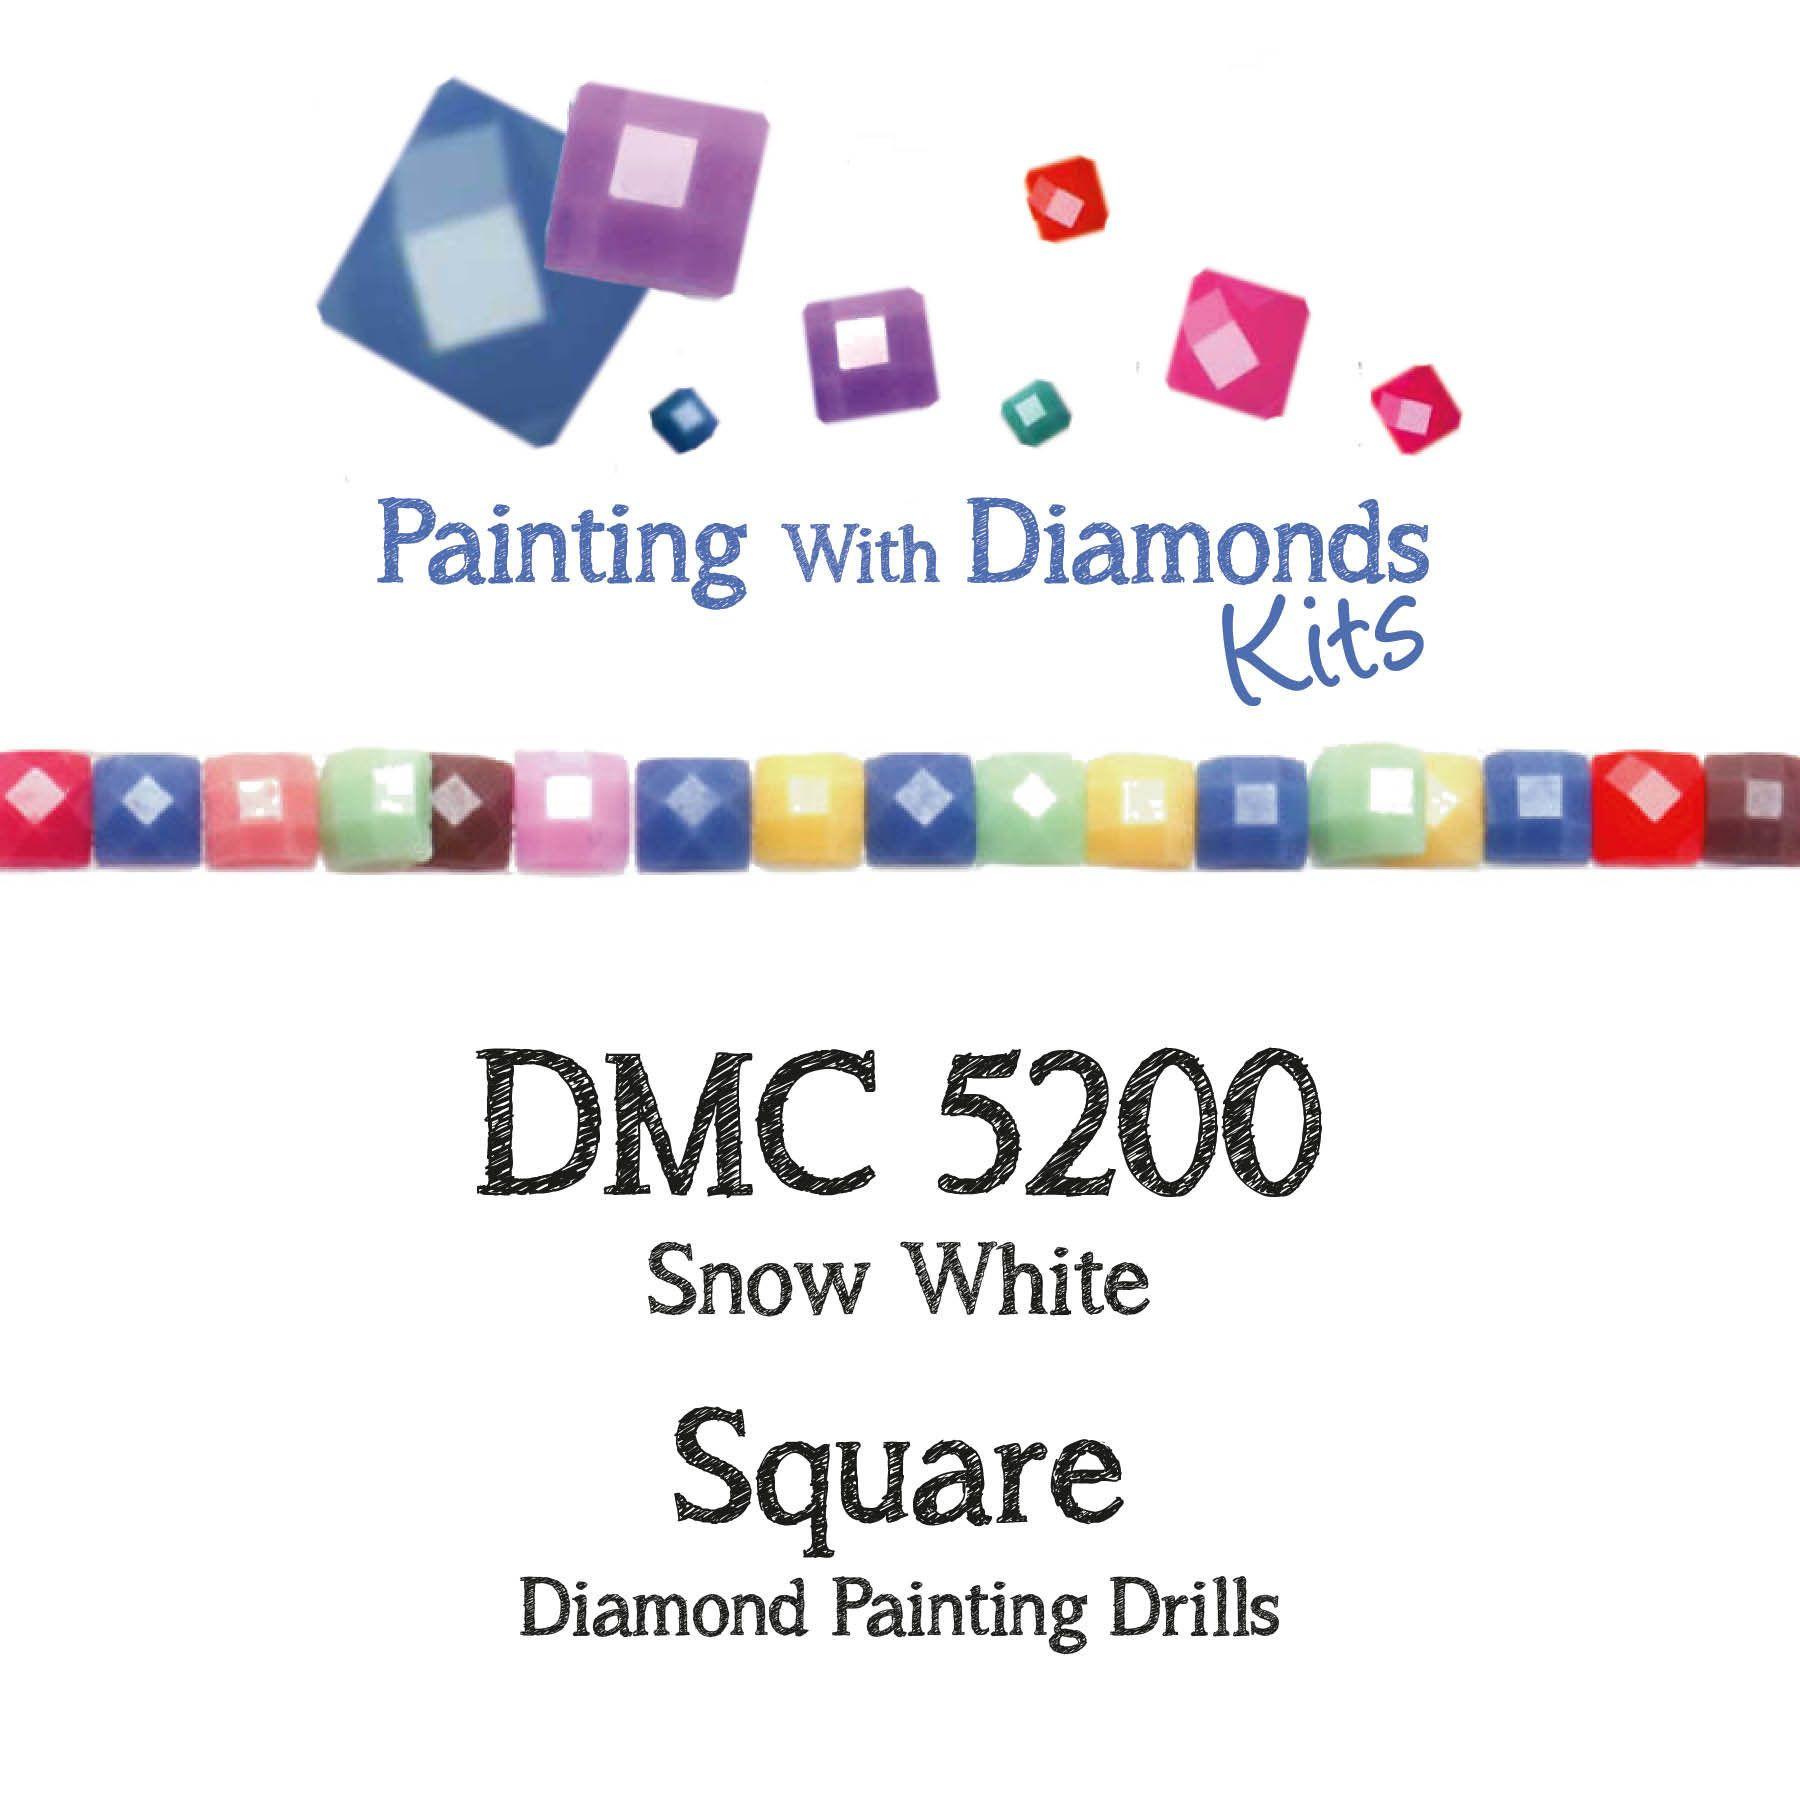 Read White Square Logo - 170 Pieces DMC 5200 SQUARE 5D Diamond Painting Drills Dmc 5200 | Etsy